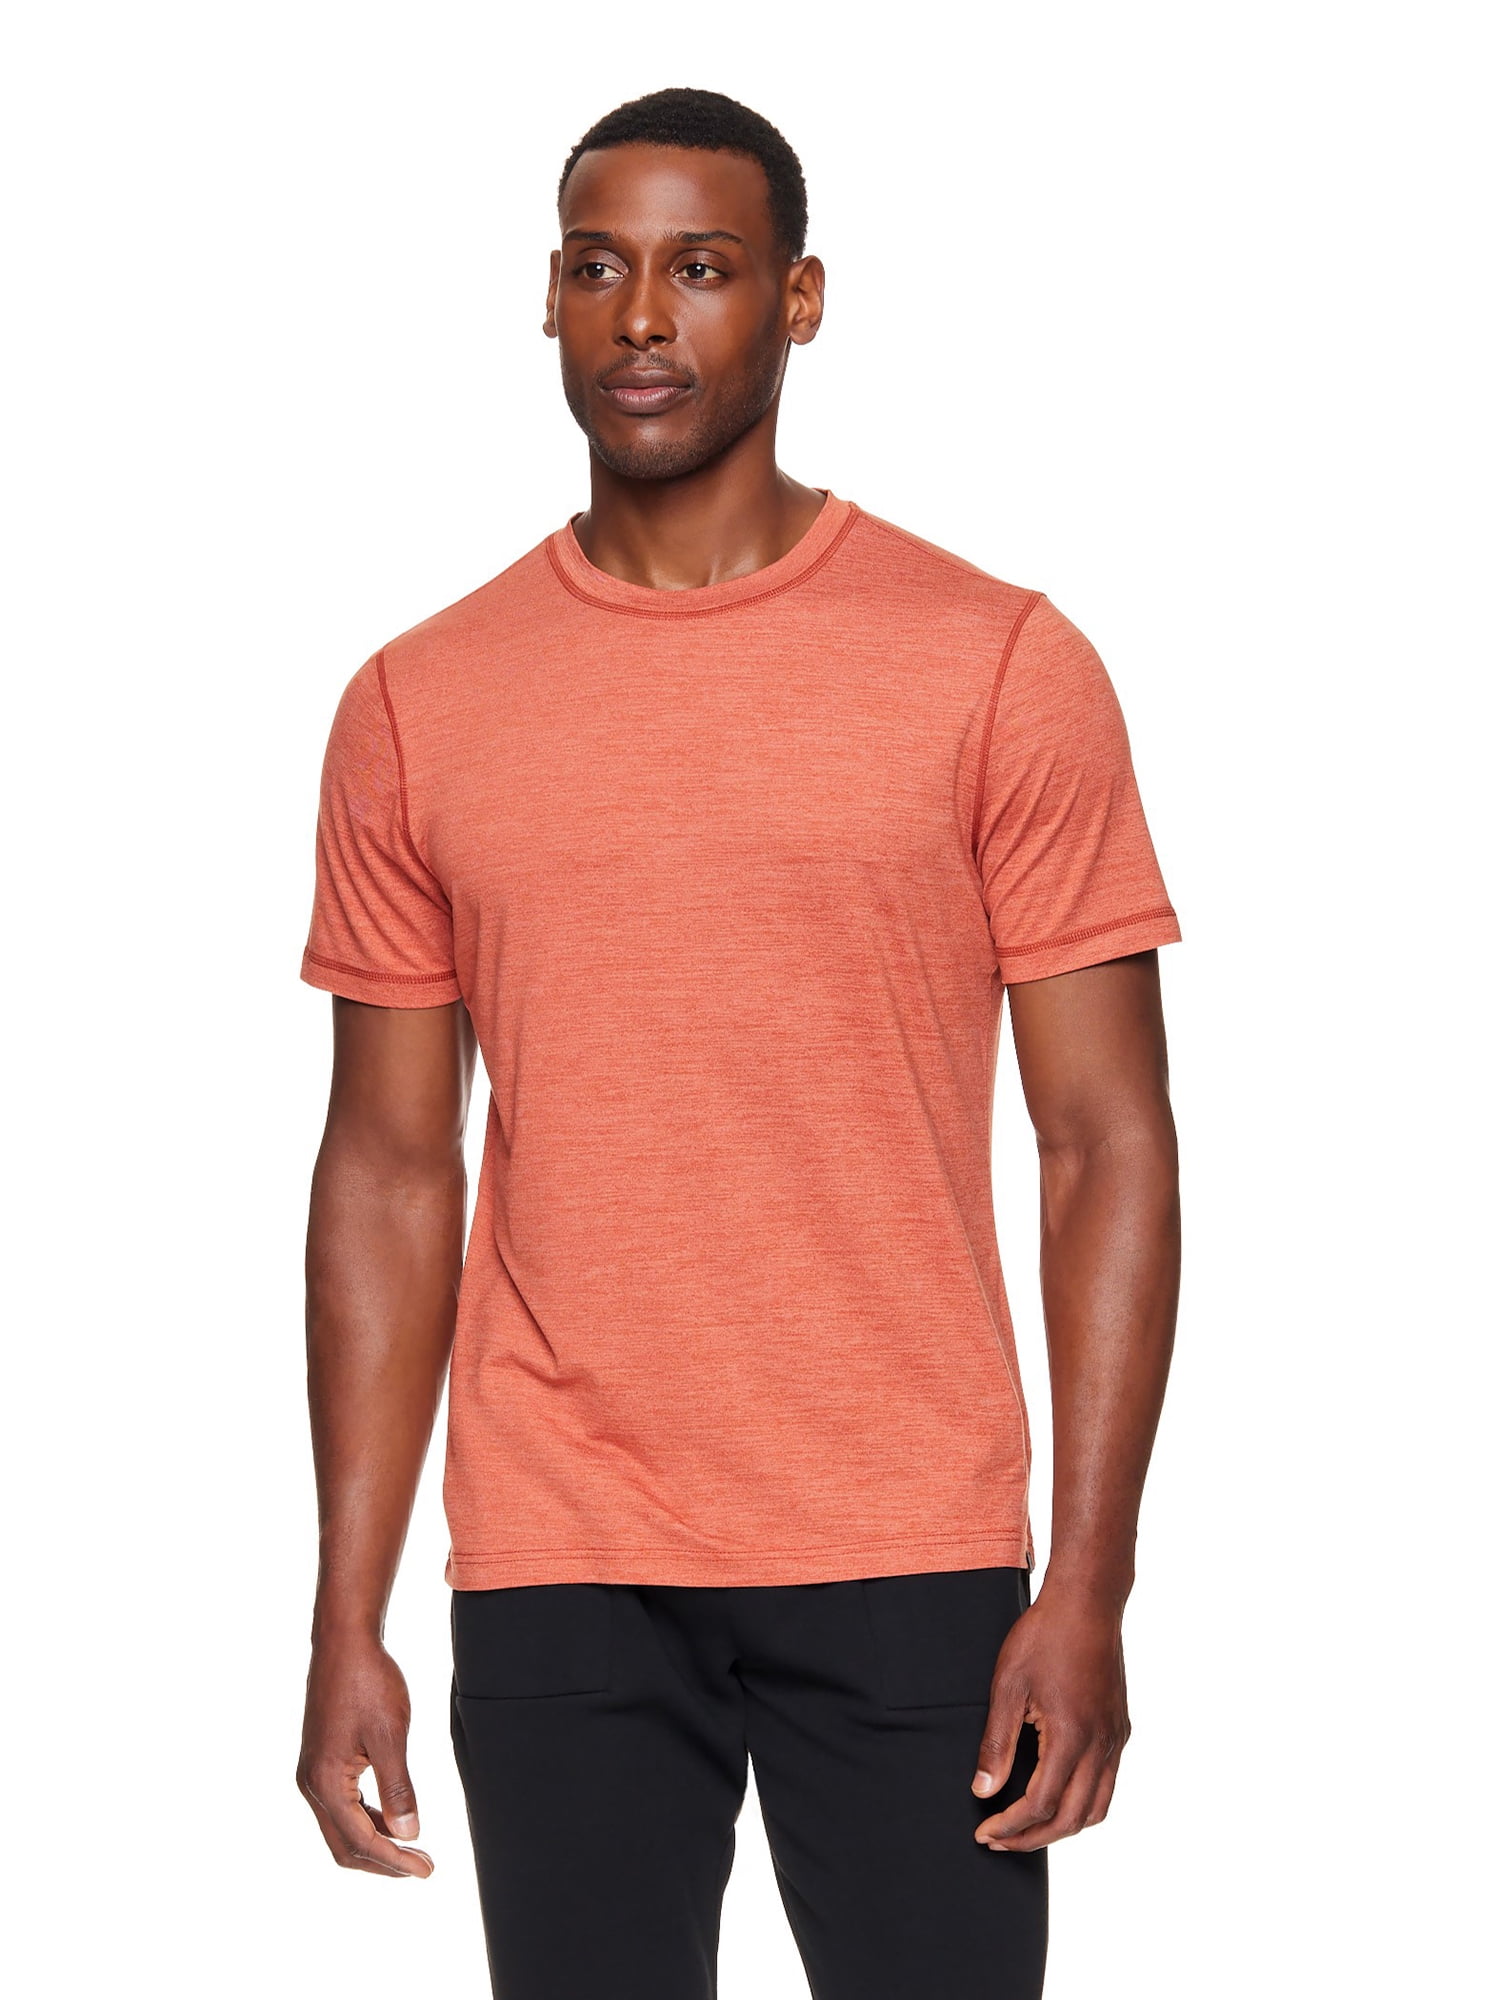 Gaiam Everyday Basic Crew T-Shirt - Short Sleeve - Save 76%